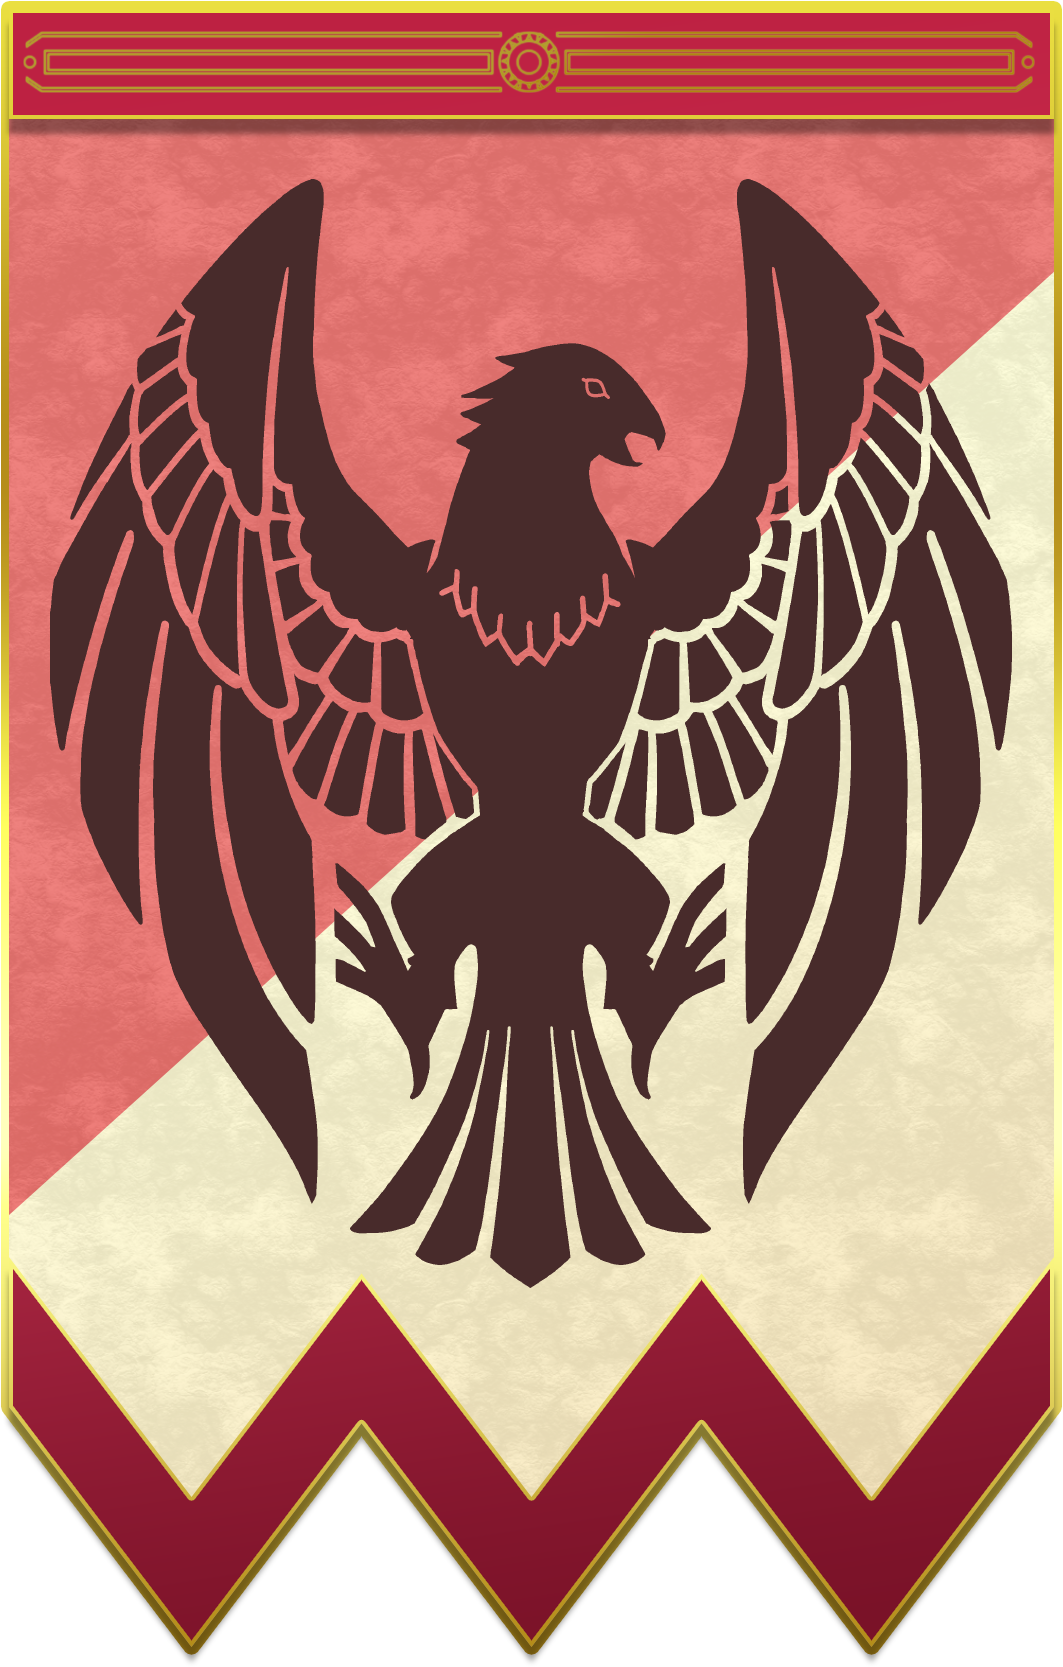 [Mild Three Houses Spoilers] The Black Eagles Want YOU: A Fire Emblem Propaganda Post